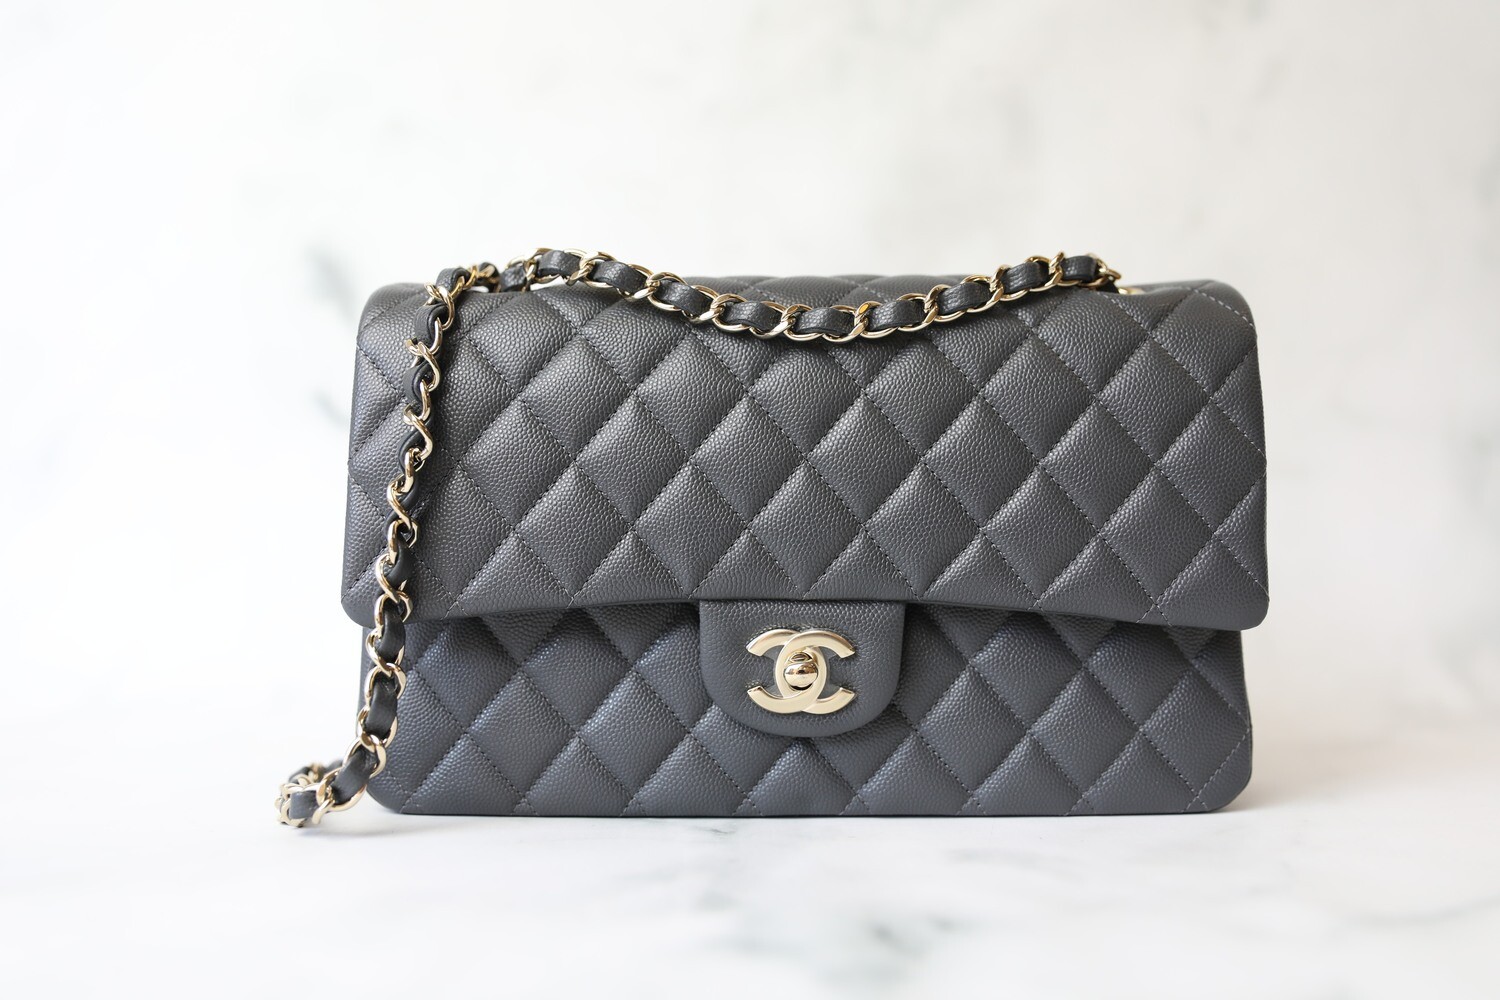 Chanel Classic Medium Double Flap, 21b Dark Grey Caviar Leather, Gold  Hardware, New In Box